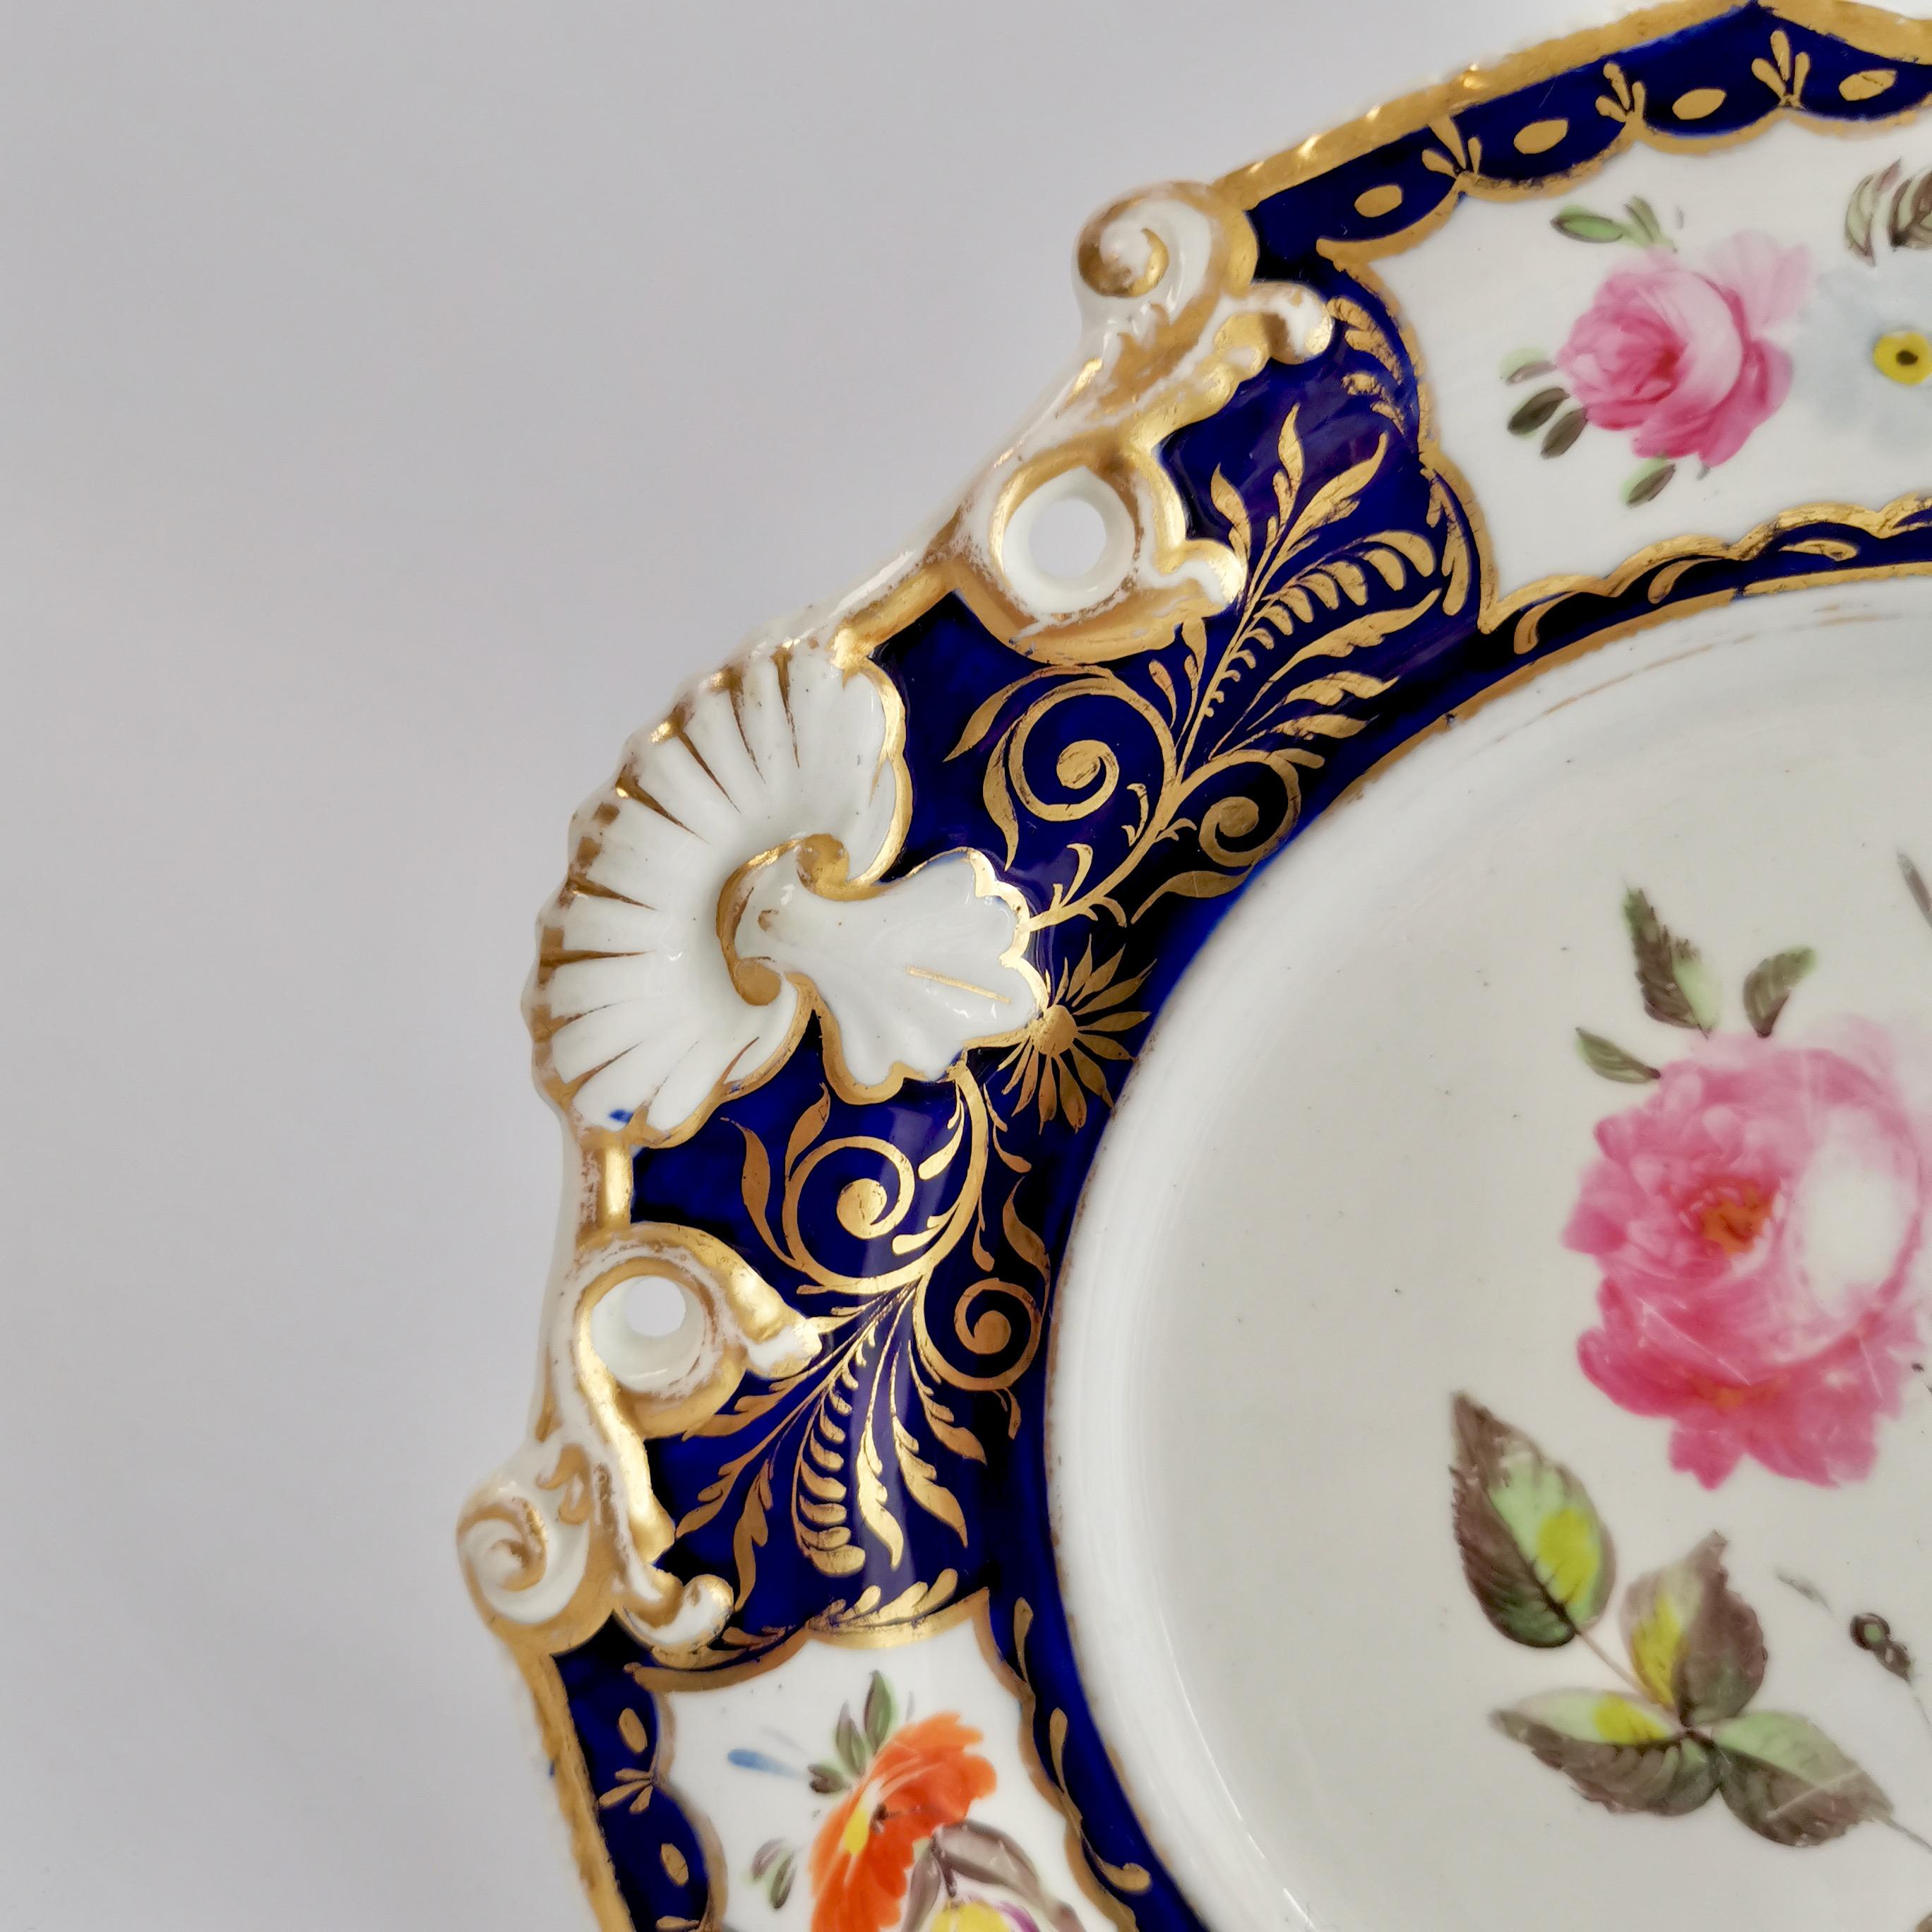 New Hall Porcelain Part Dessert Service, Cobalt Blue, Flowers, Regency 1824-1830 6